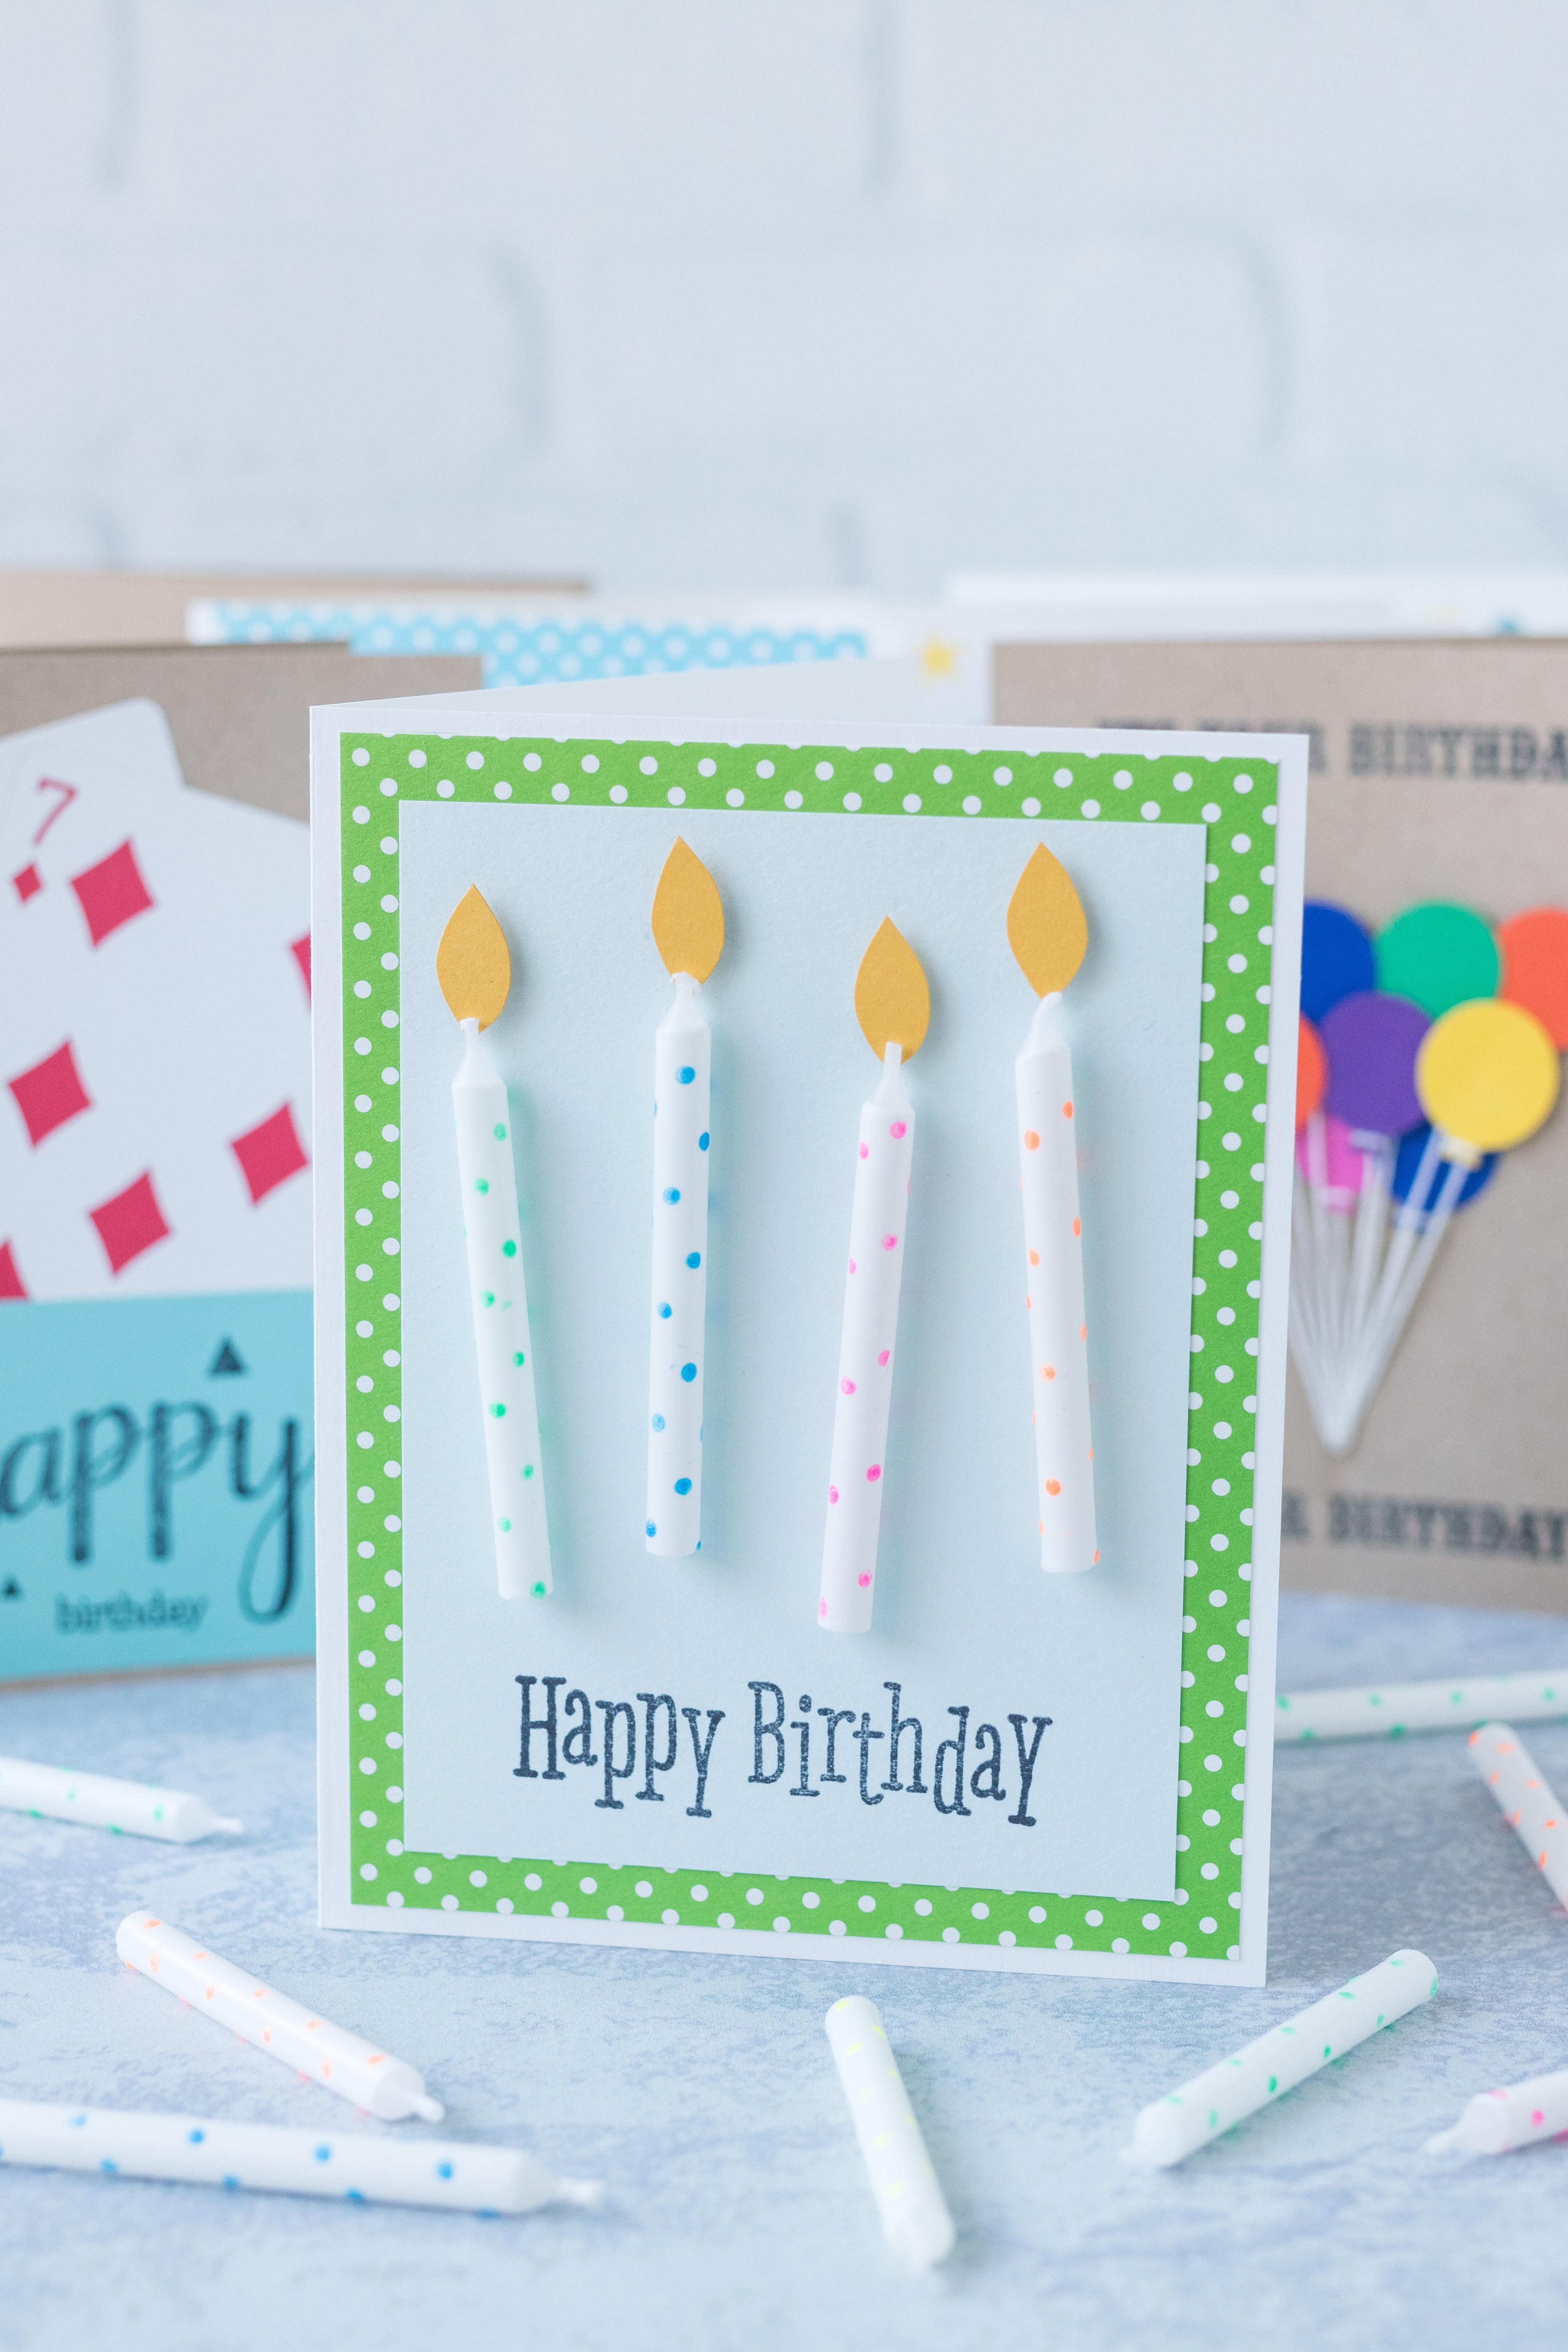 Easy Handmade Birthday Card Ideas 10 Simple Diy Birthday Cards Rose Clearfield